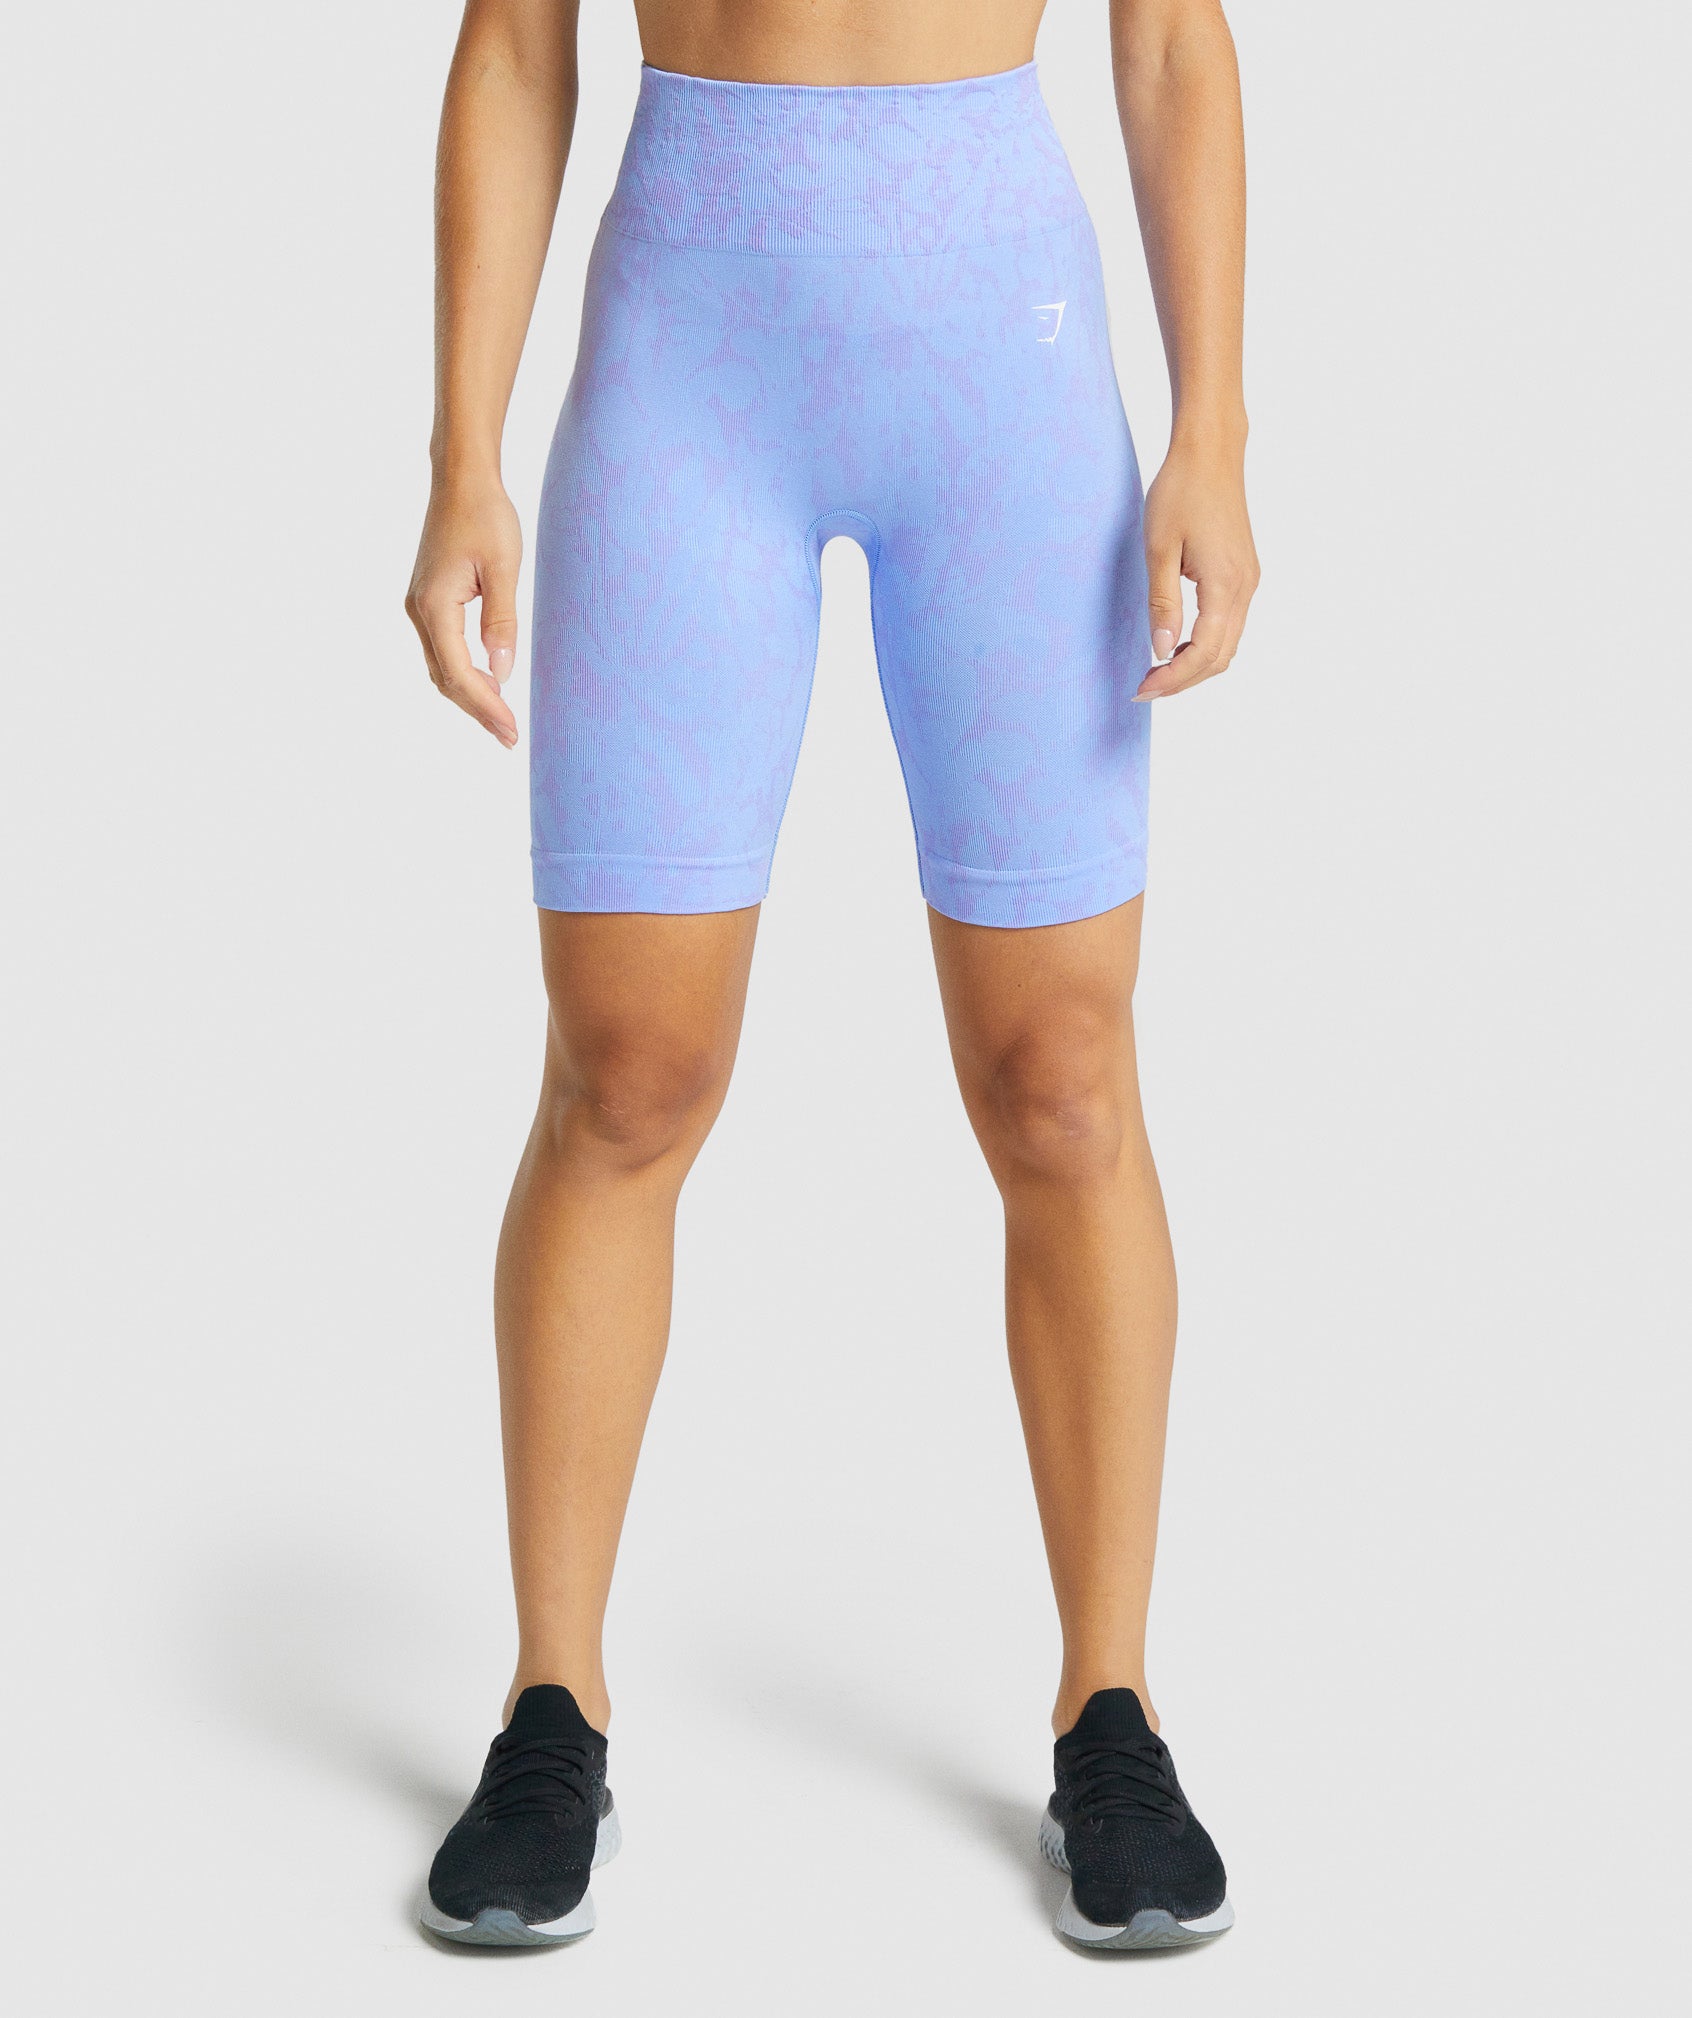 Gymshark Baby Blue Marl/Light Blue - Adapt Ombre Shorts